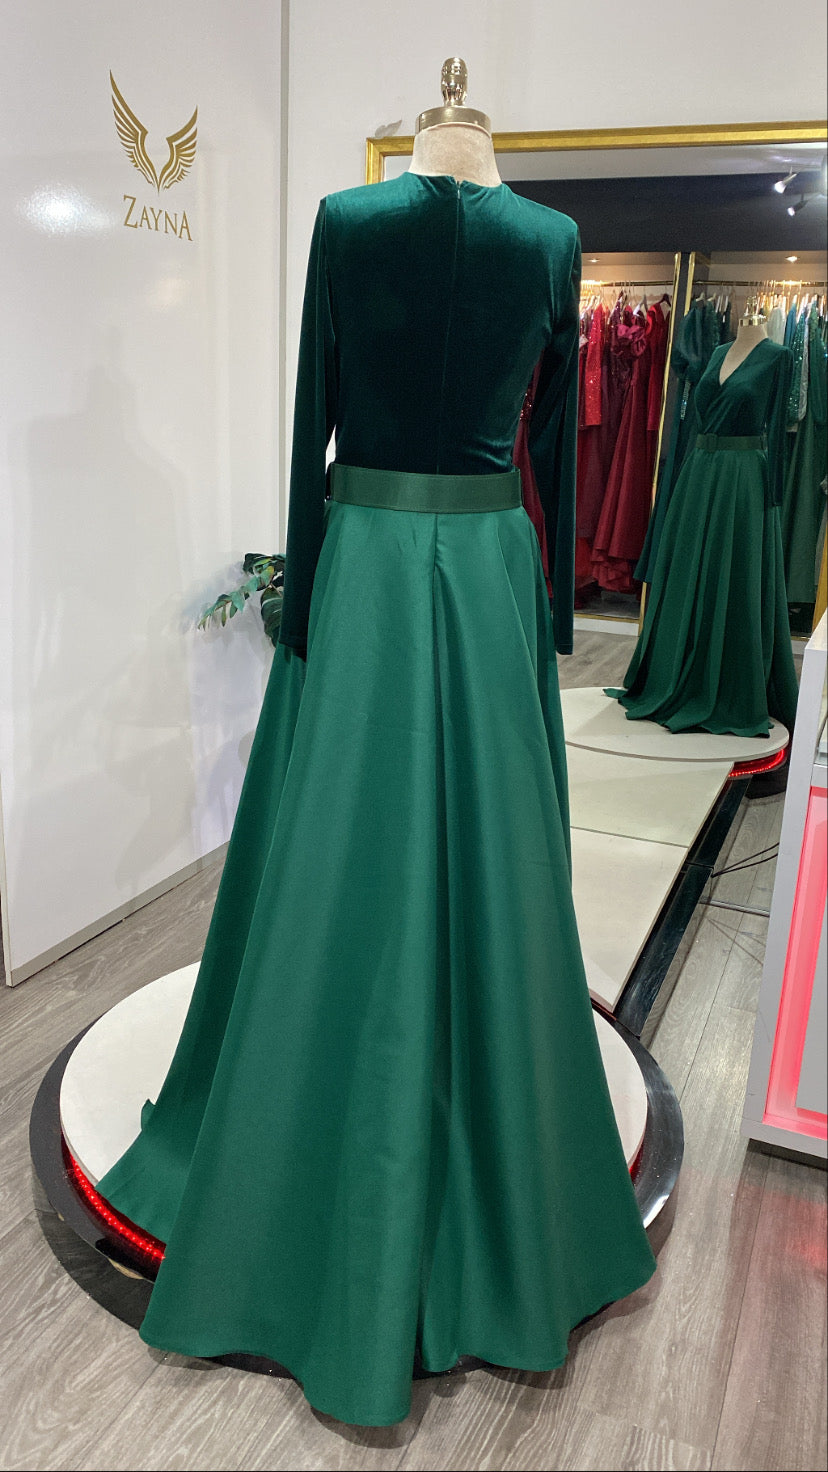 Our green elegant dress